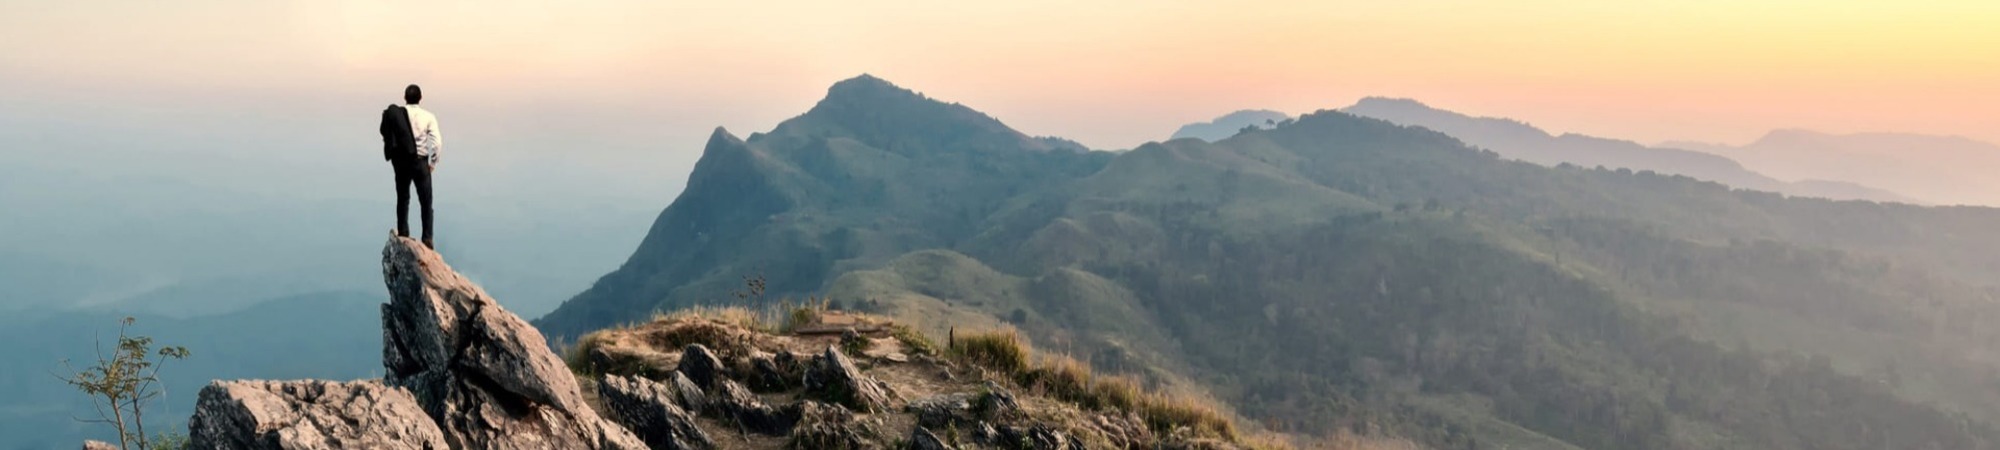 Businessman hike on the peak of rocks mountain at sunset, success, winner, leader concept